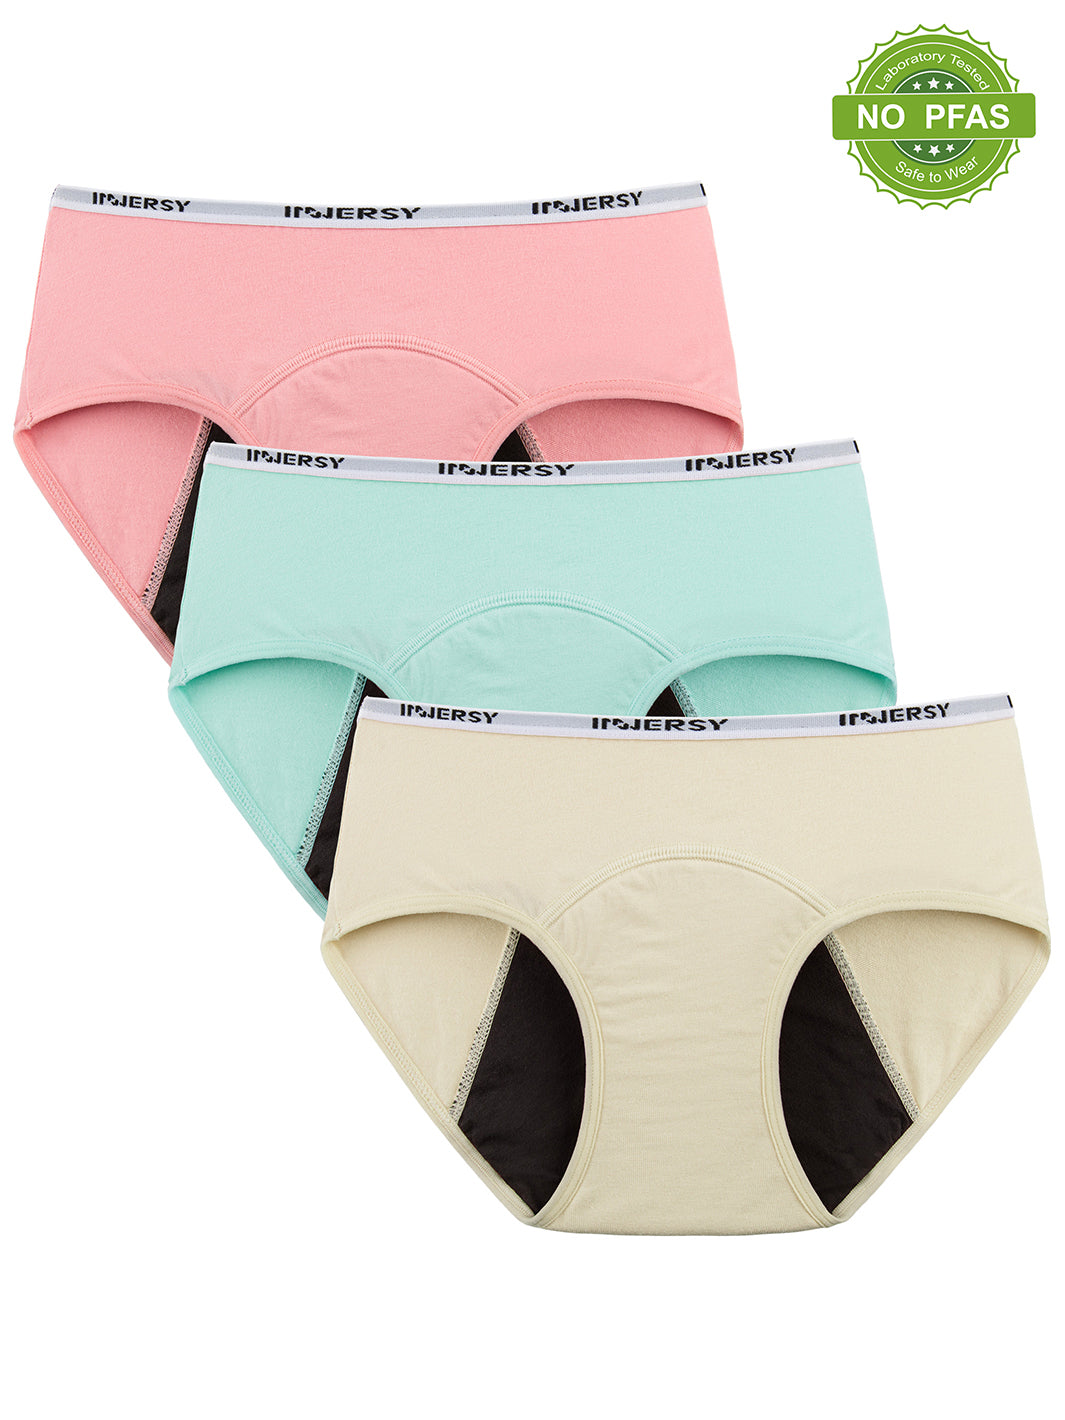 INNERSY Period Underwear for Teens Cotton Leekproof Menstrual Panties  3-Pack (M(10-12 yrs), Refreshing Blue Pink Polka Dots)